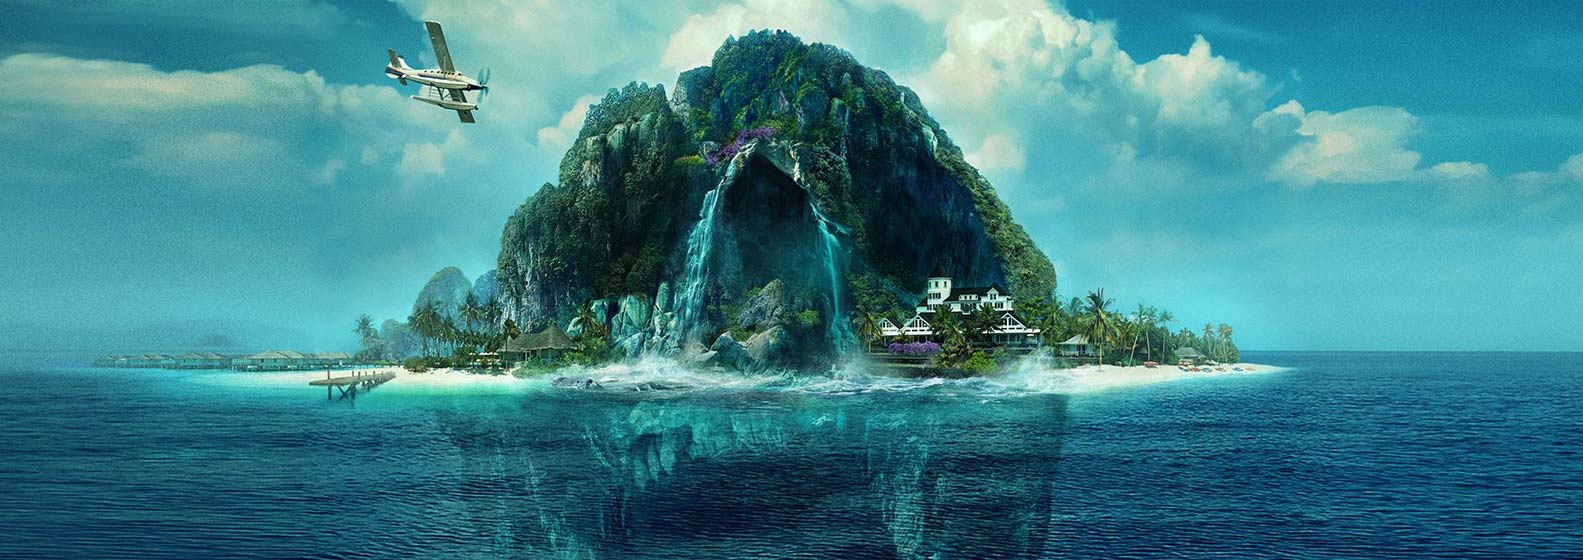 Fantasy Island - Header Image